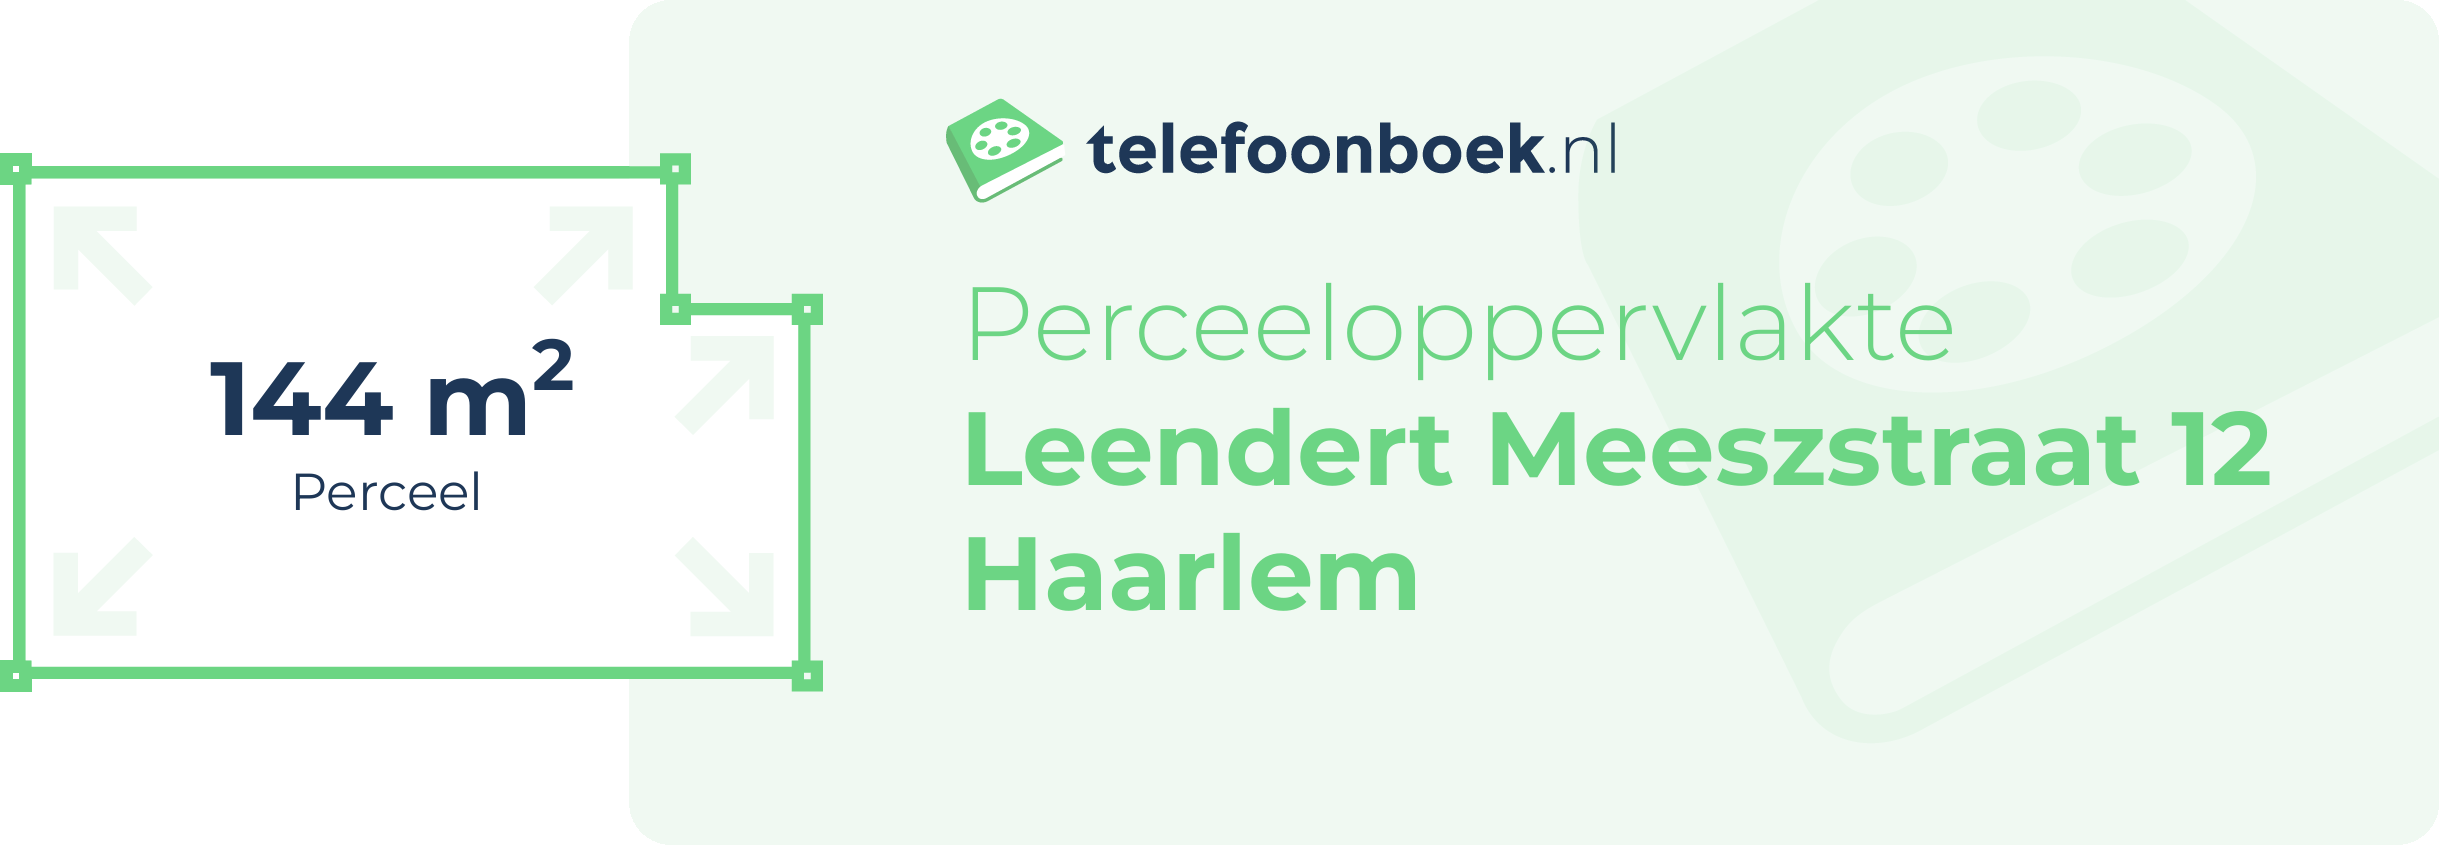 Perceeloppervlakte Leendert Meeszstraat 12 Haarlem